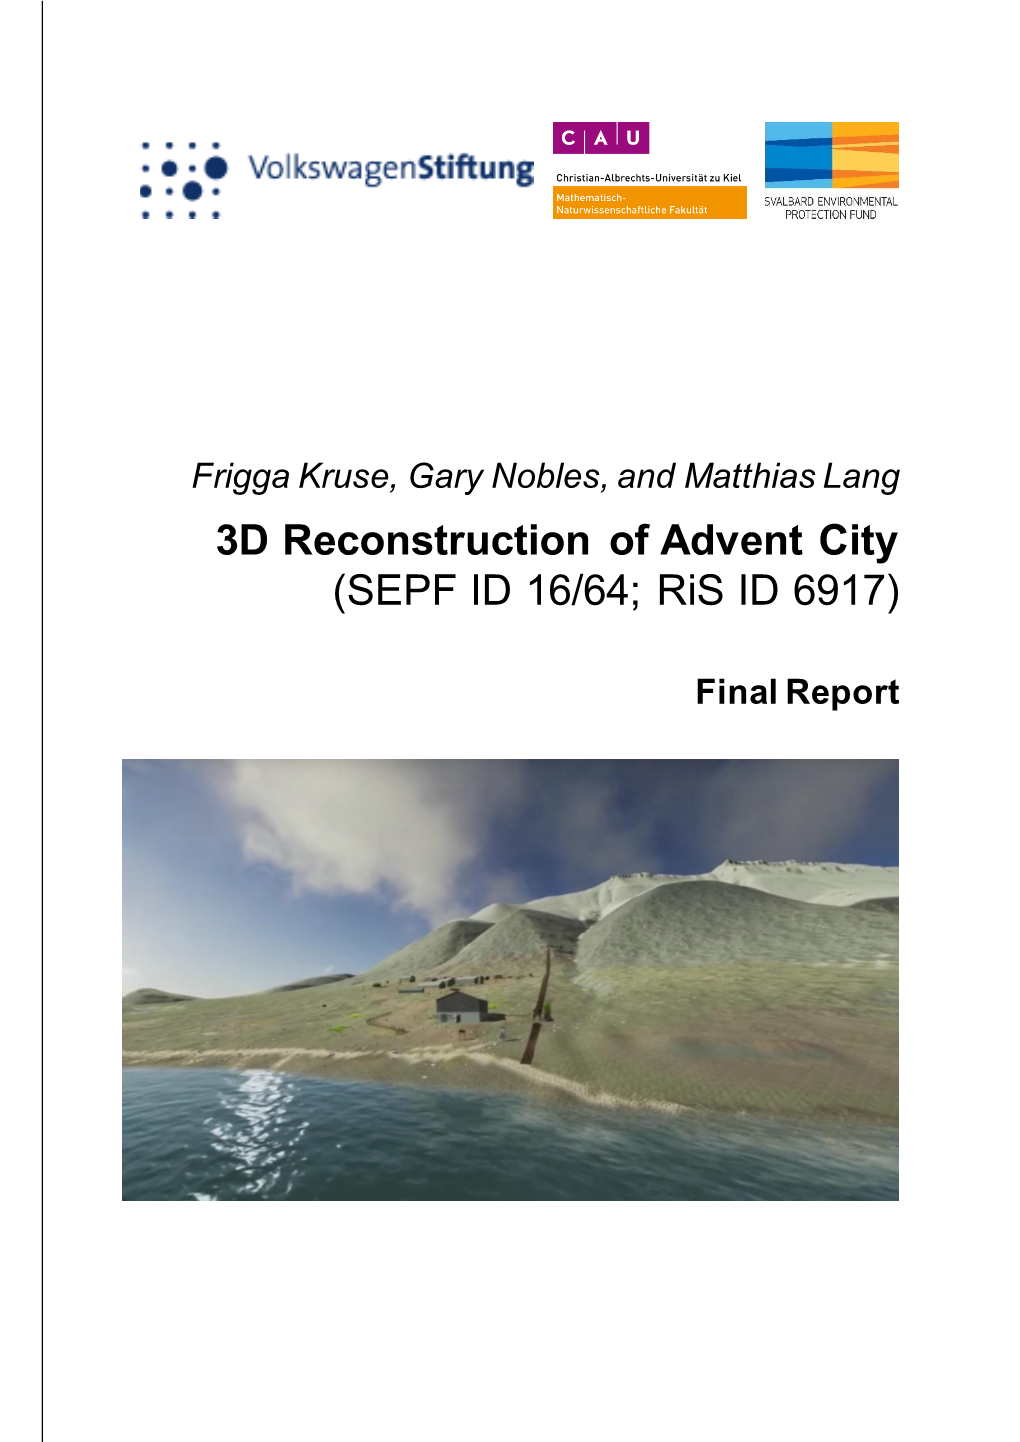 3D Reconstruction of Advent City (SEPF ID 16/64; Ris ID 6917)